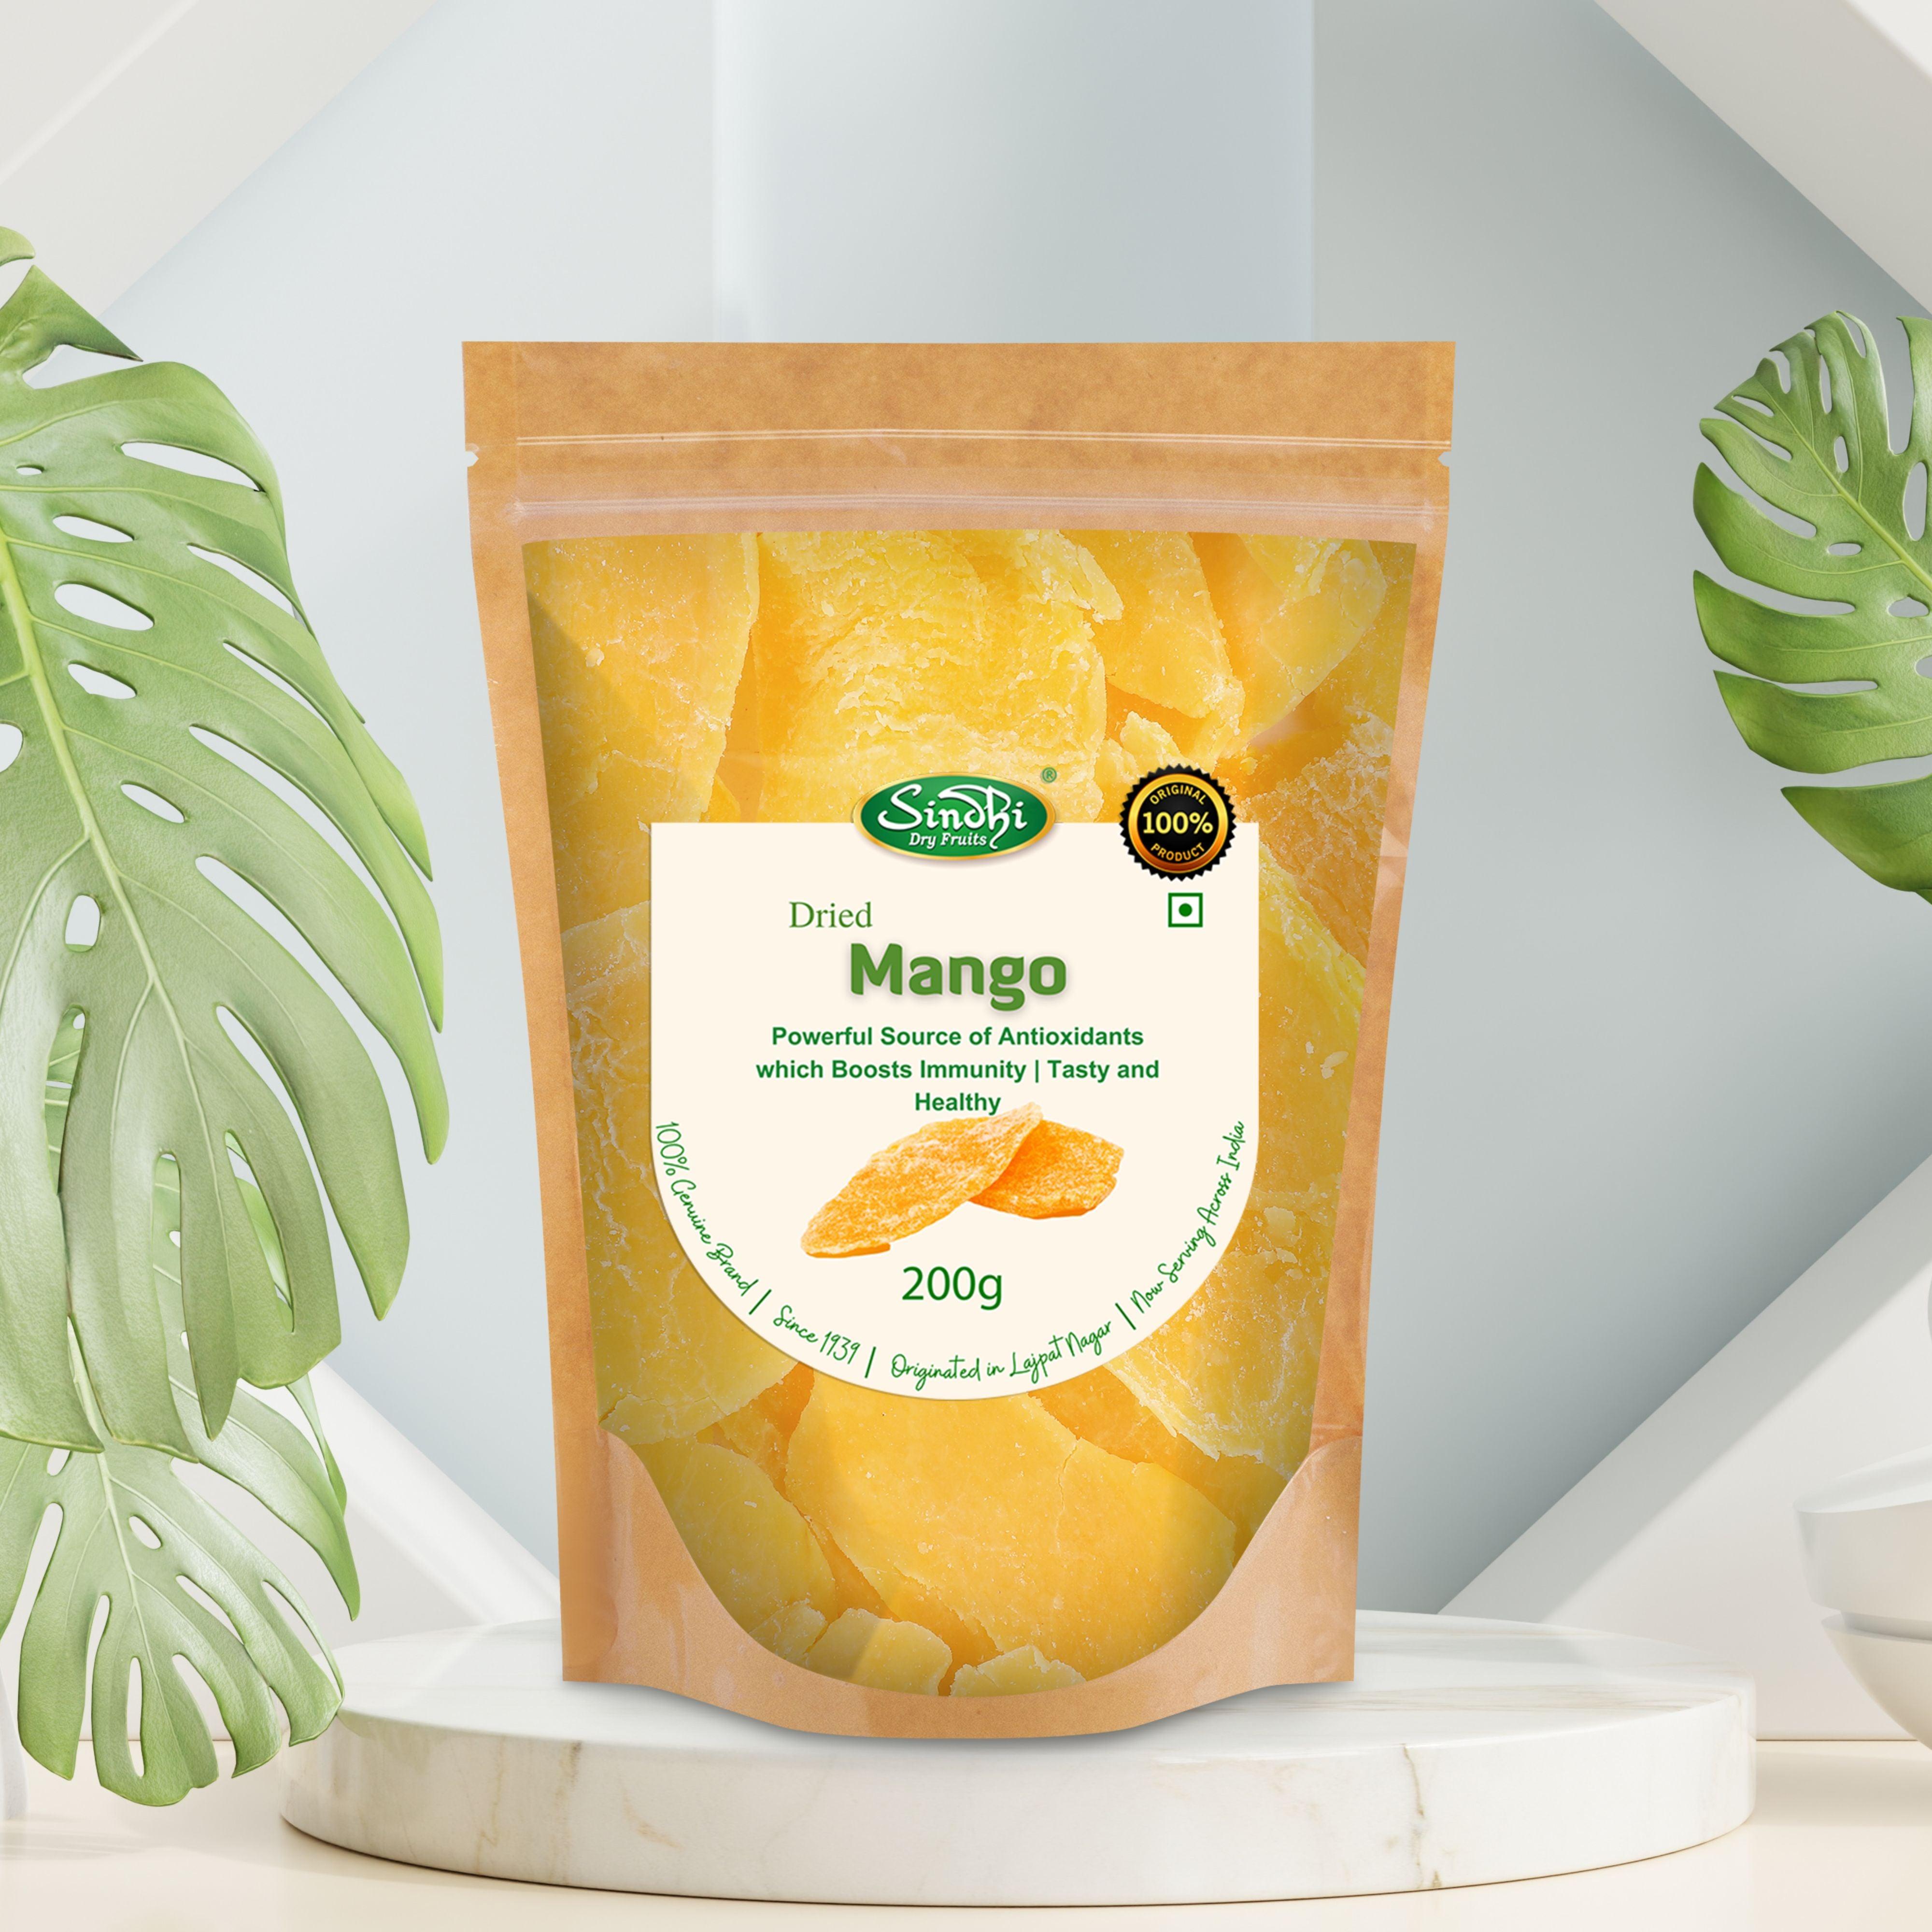 Buy premium dry fruits online including mangoes